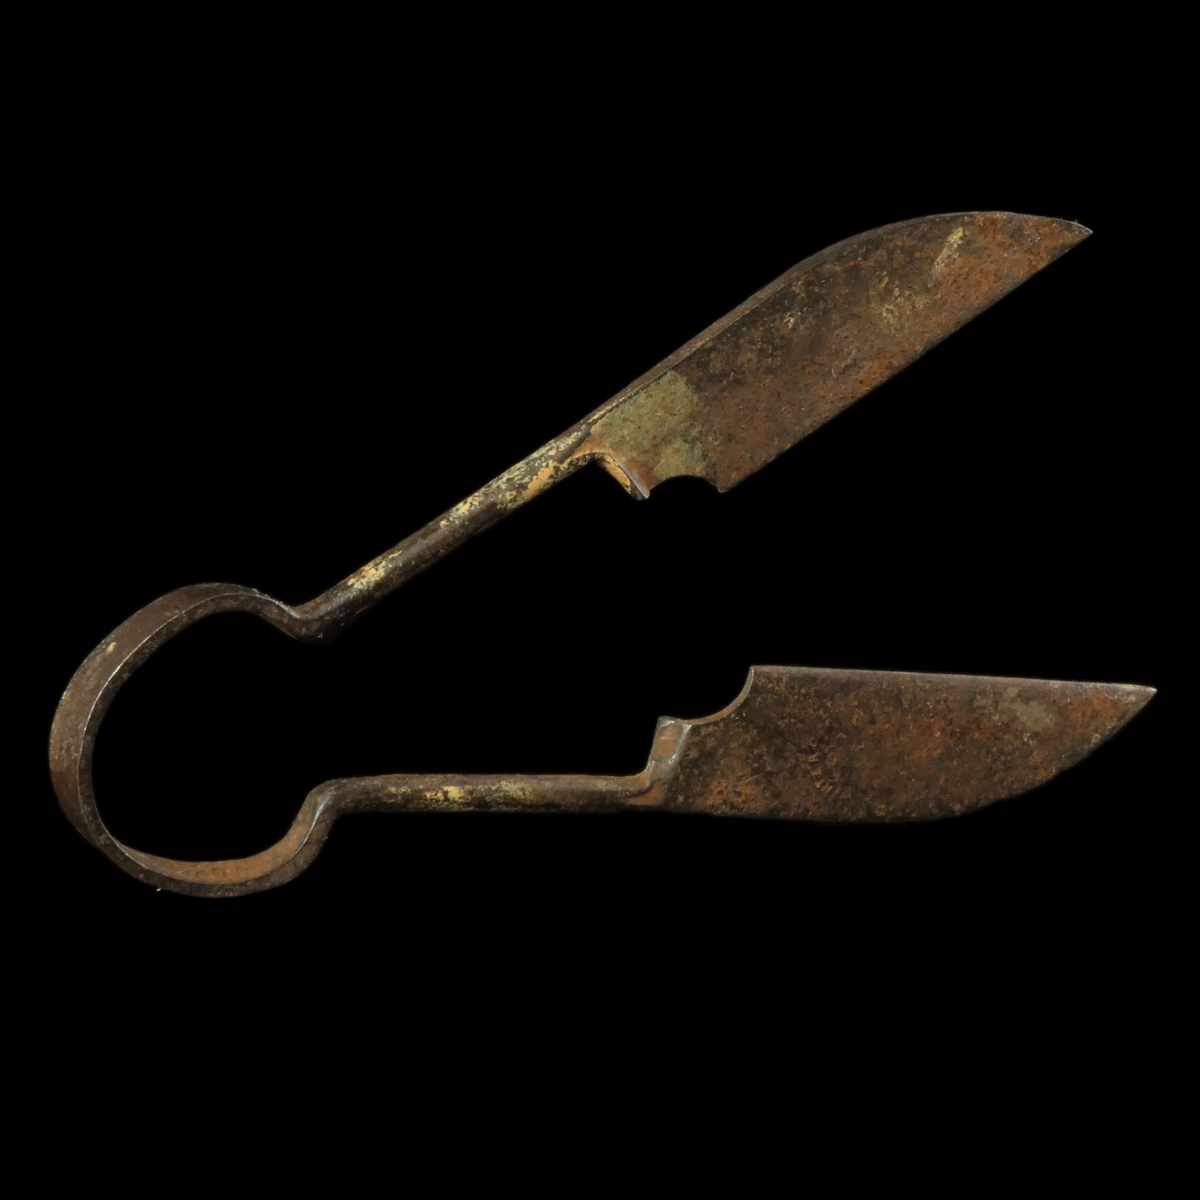 Medieval iron spring scissors / shears